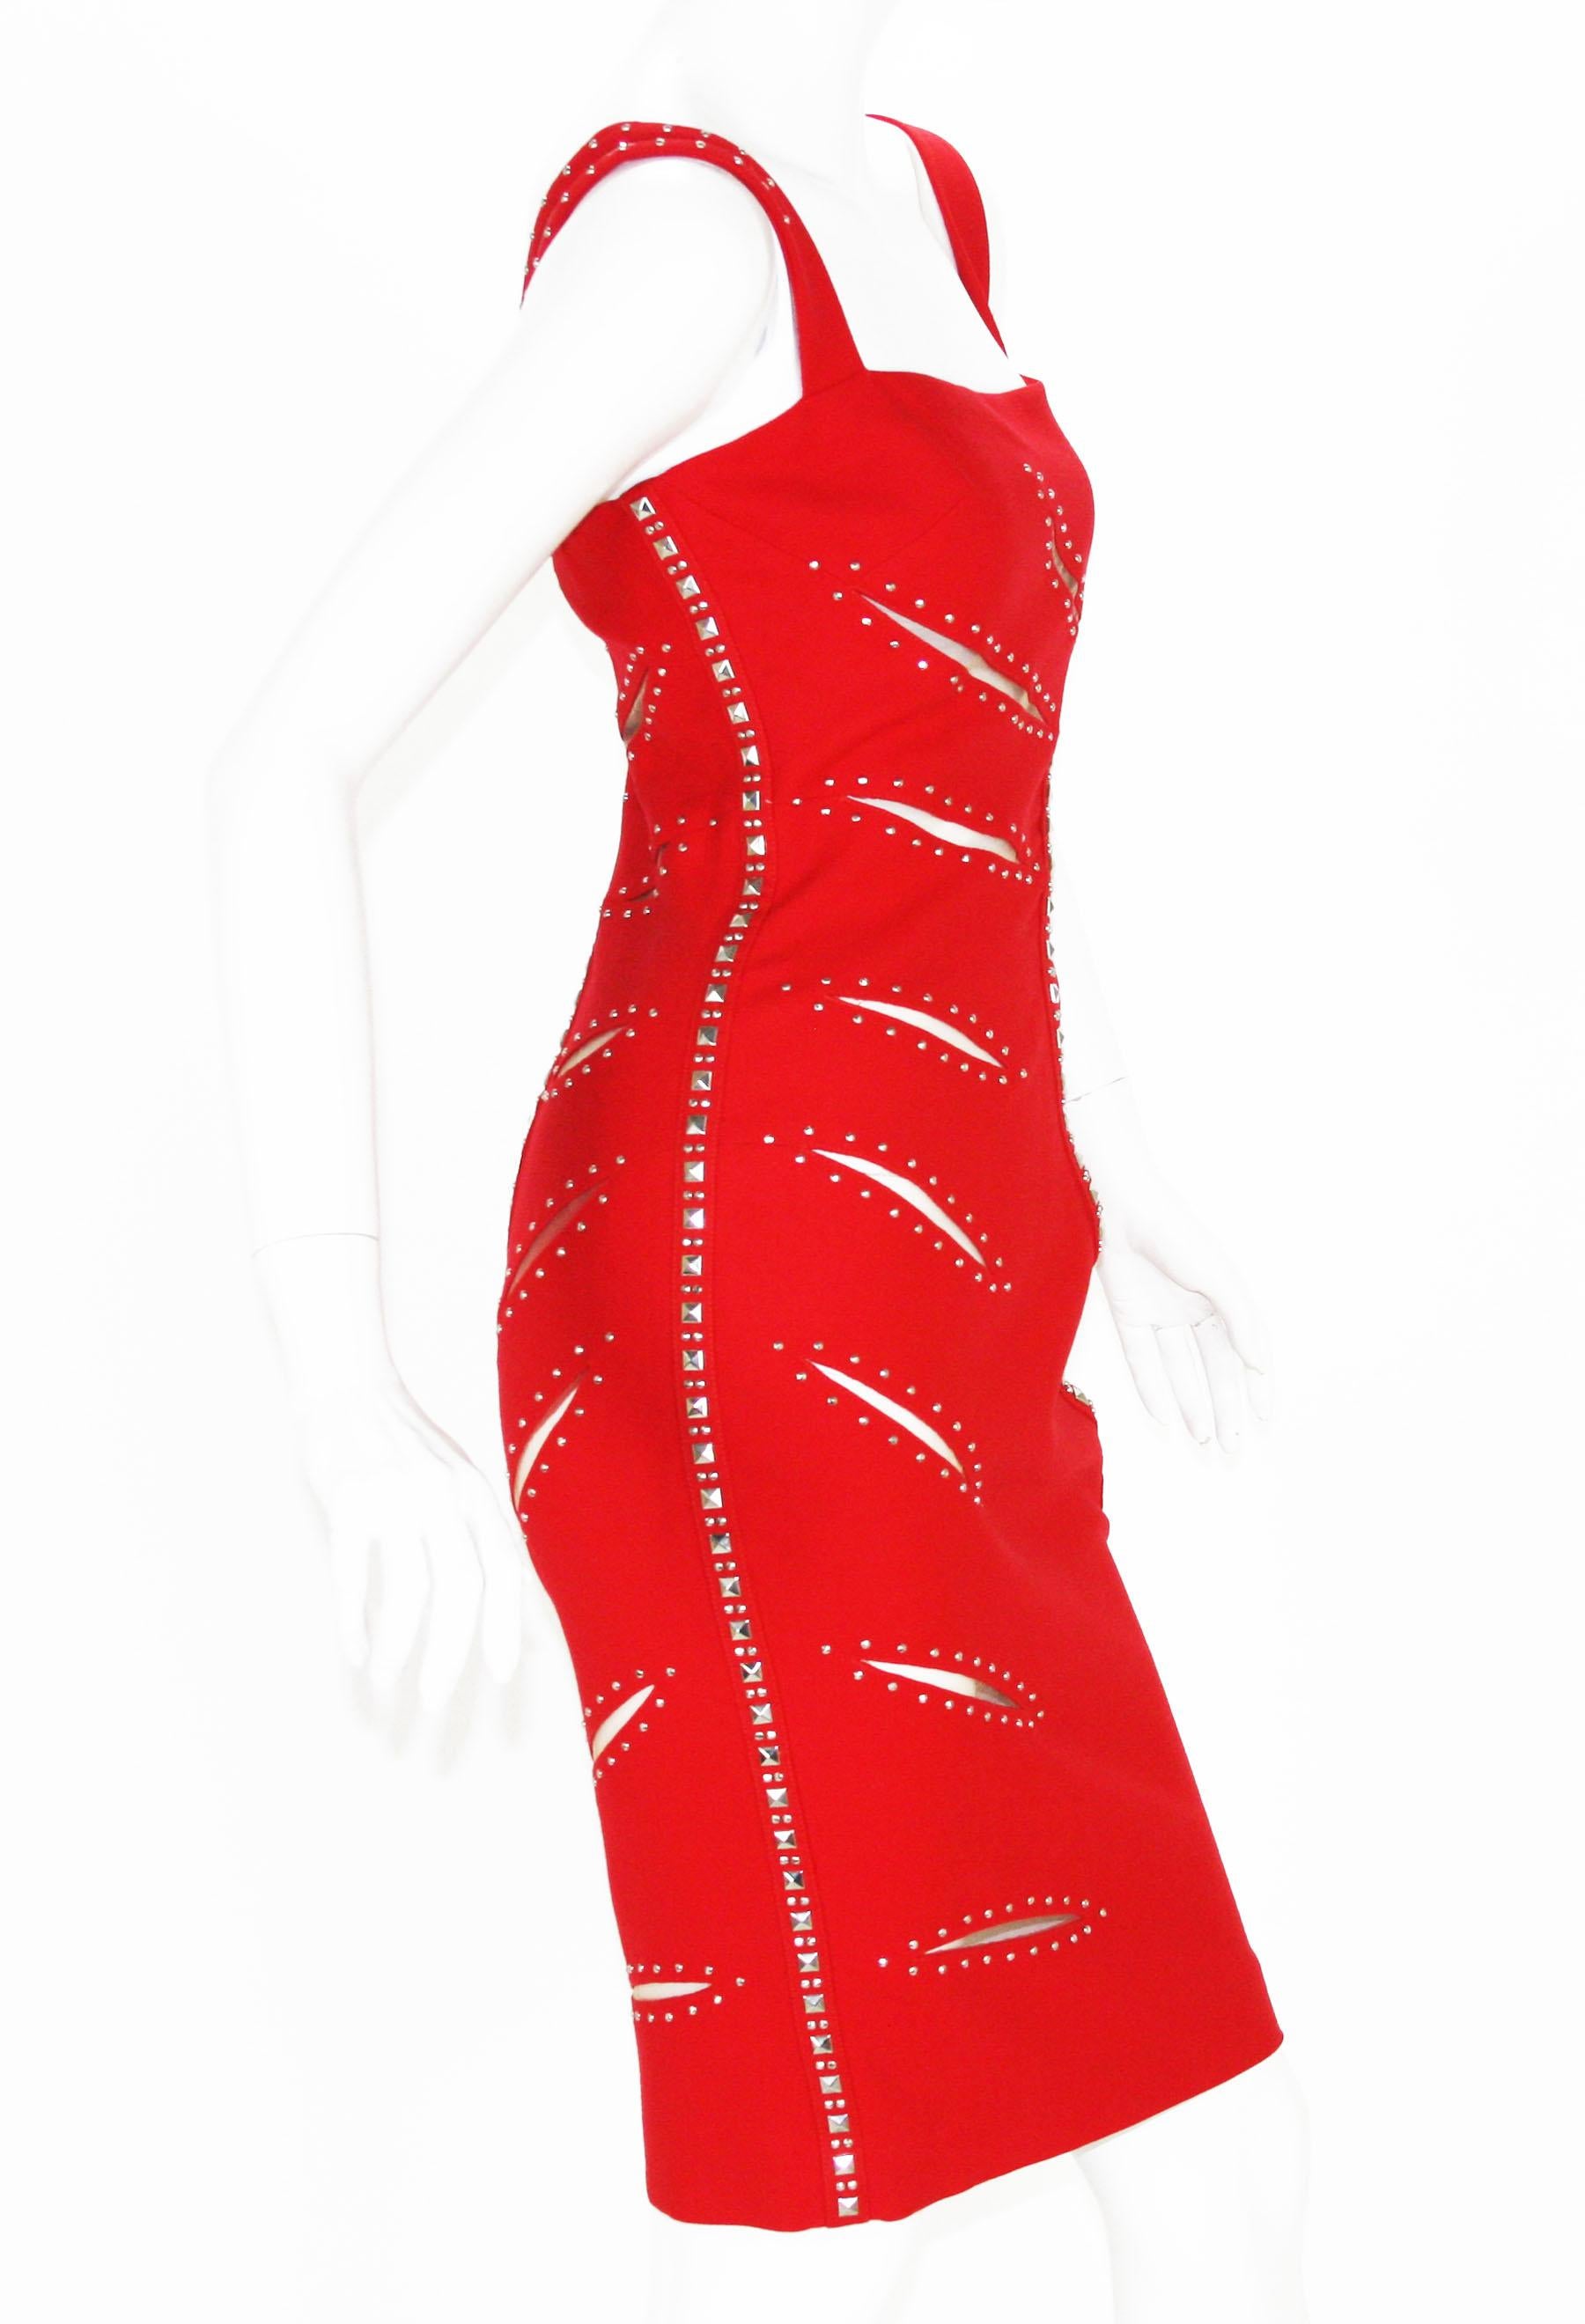 versace red dress